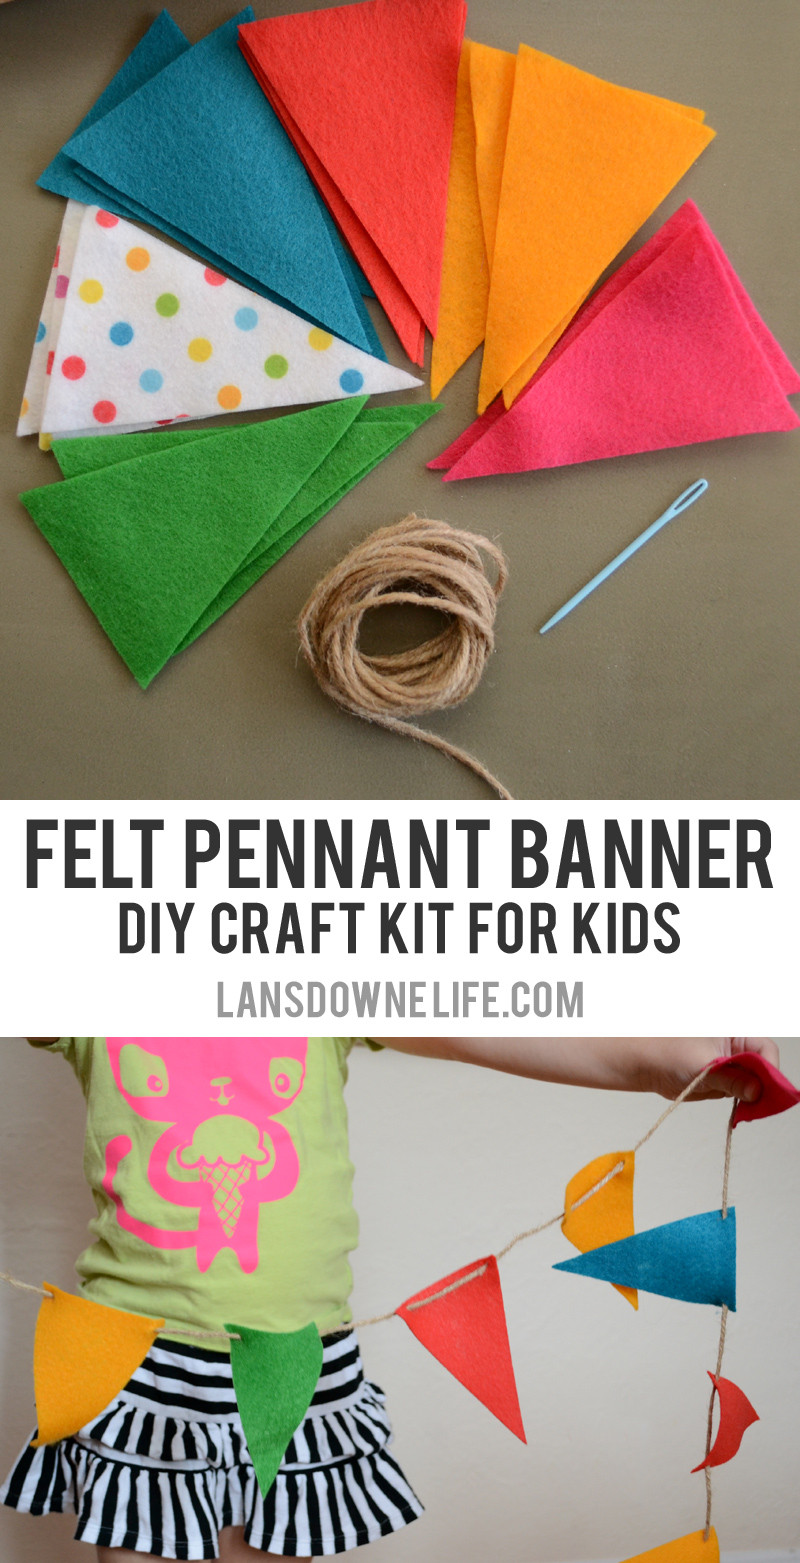 DIY Craft Kits For Kids
 DIY Craft kits for kids Felt pennant banner Lansdowne Life